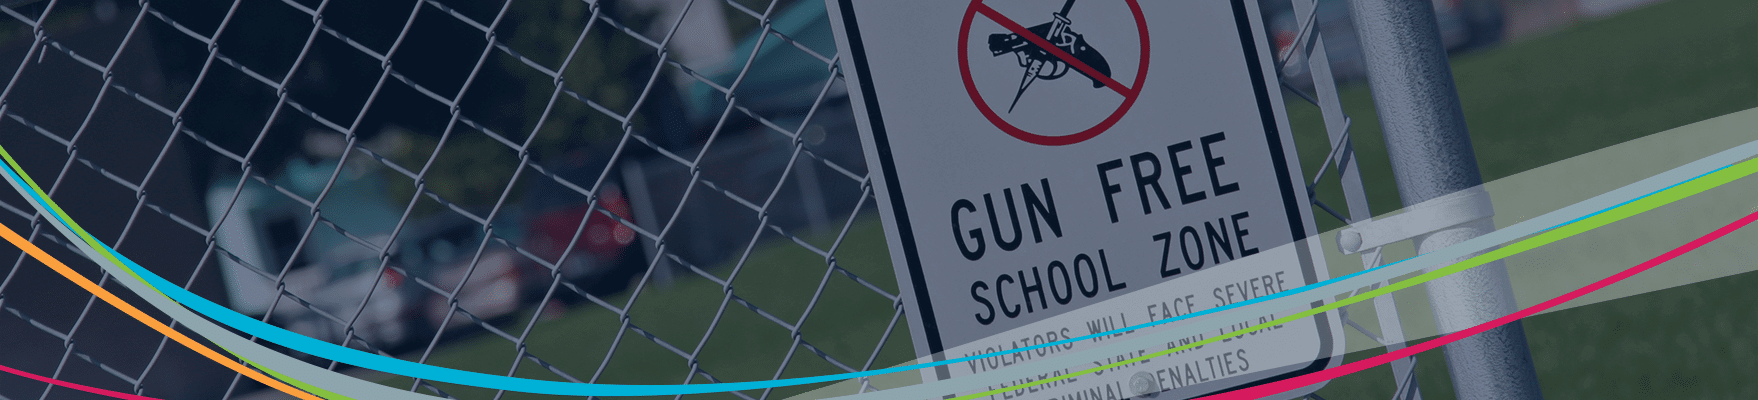 Gun free zone sign on fence School violence prevention header